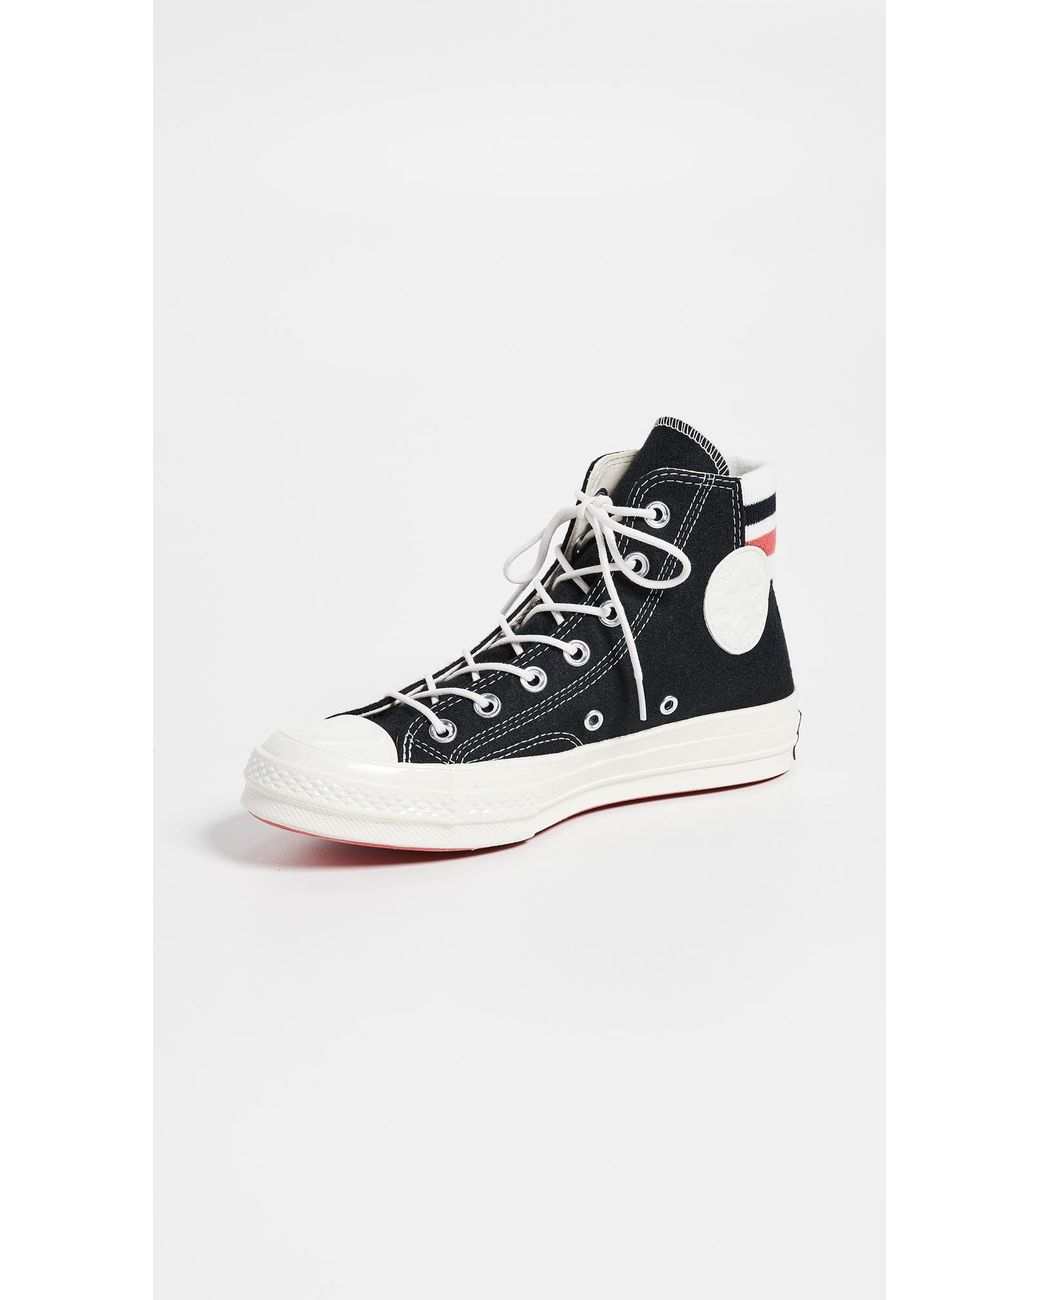 Converse Felt Chuck 70 Retro Stripe High Top Sneakers in Black/Red (Black)  | Lyst